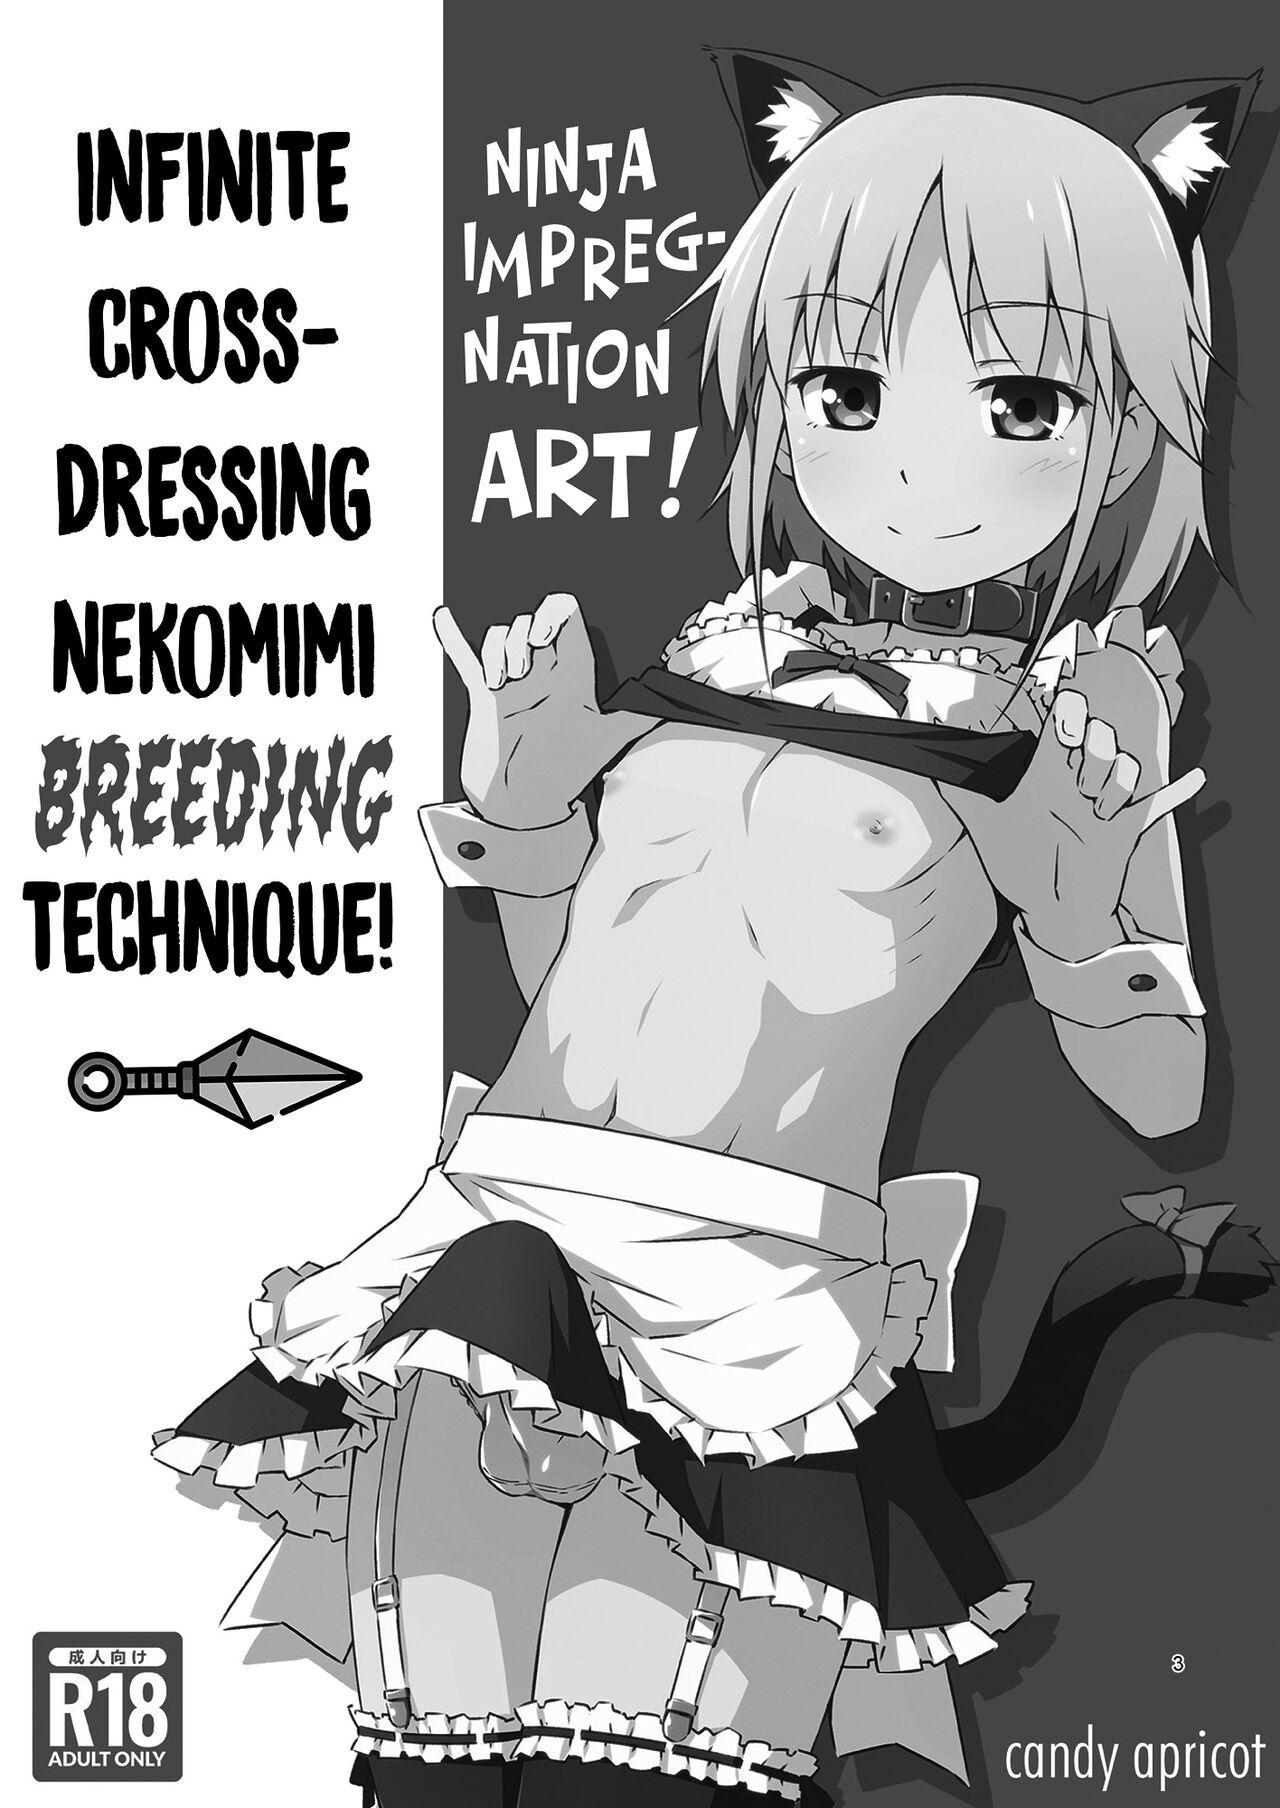 Ninpou! Josou Nekomimi Maid Mugen Tanetsuke no Jutsu!! | Ninja Impregnation Art: Infinite Crossdressing Nekomimi Breeding Technique! 1